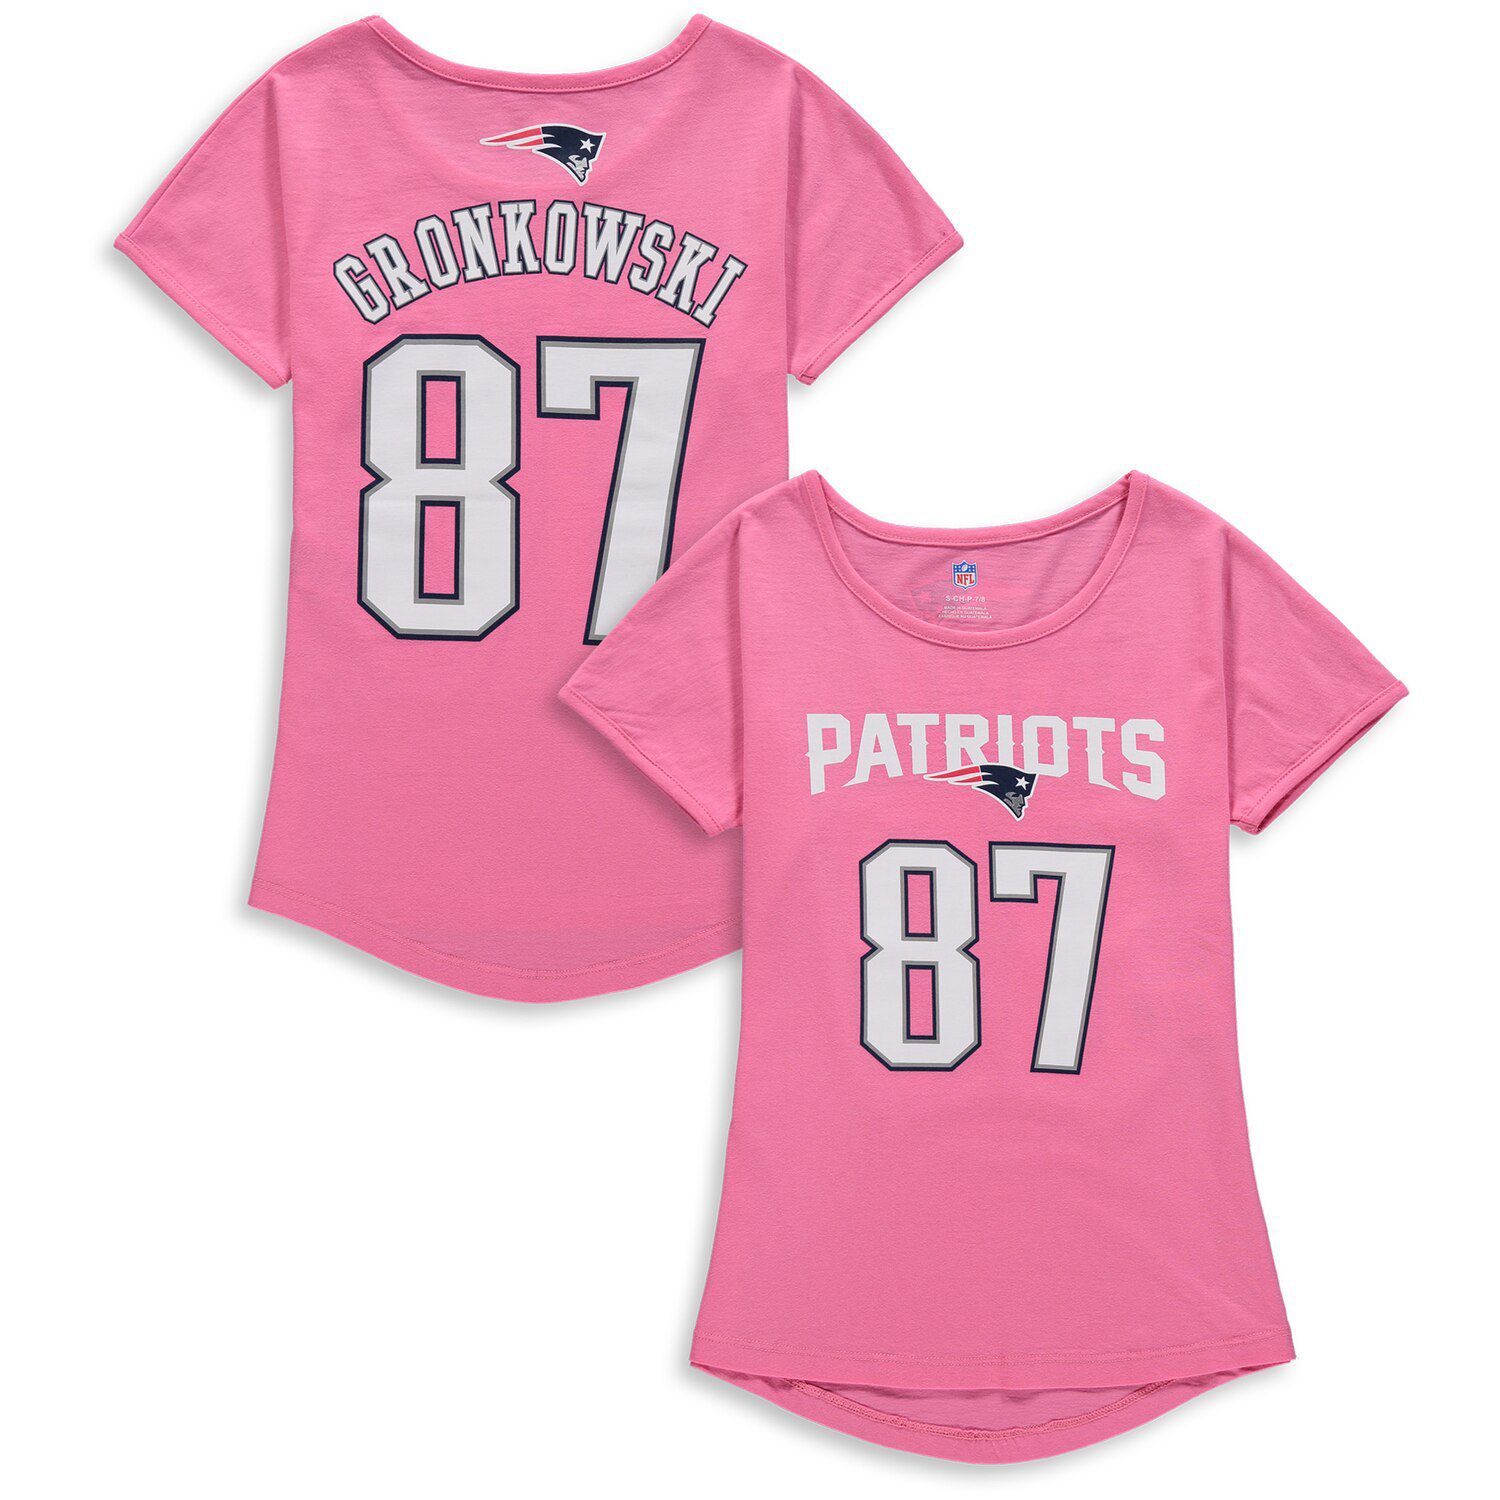 womens patriots jersey pink